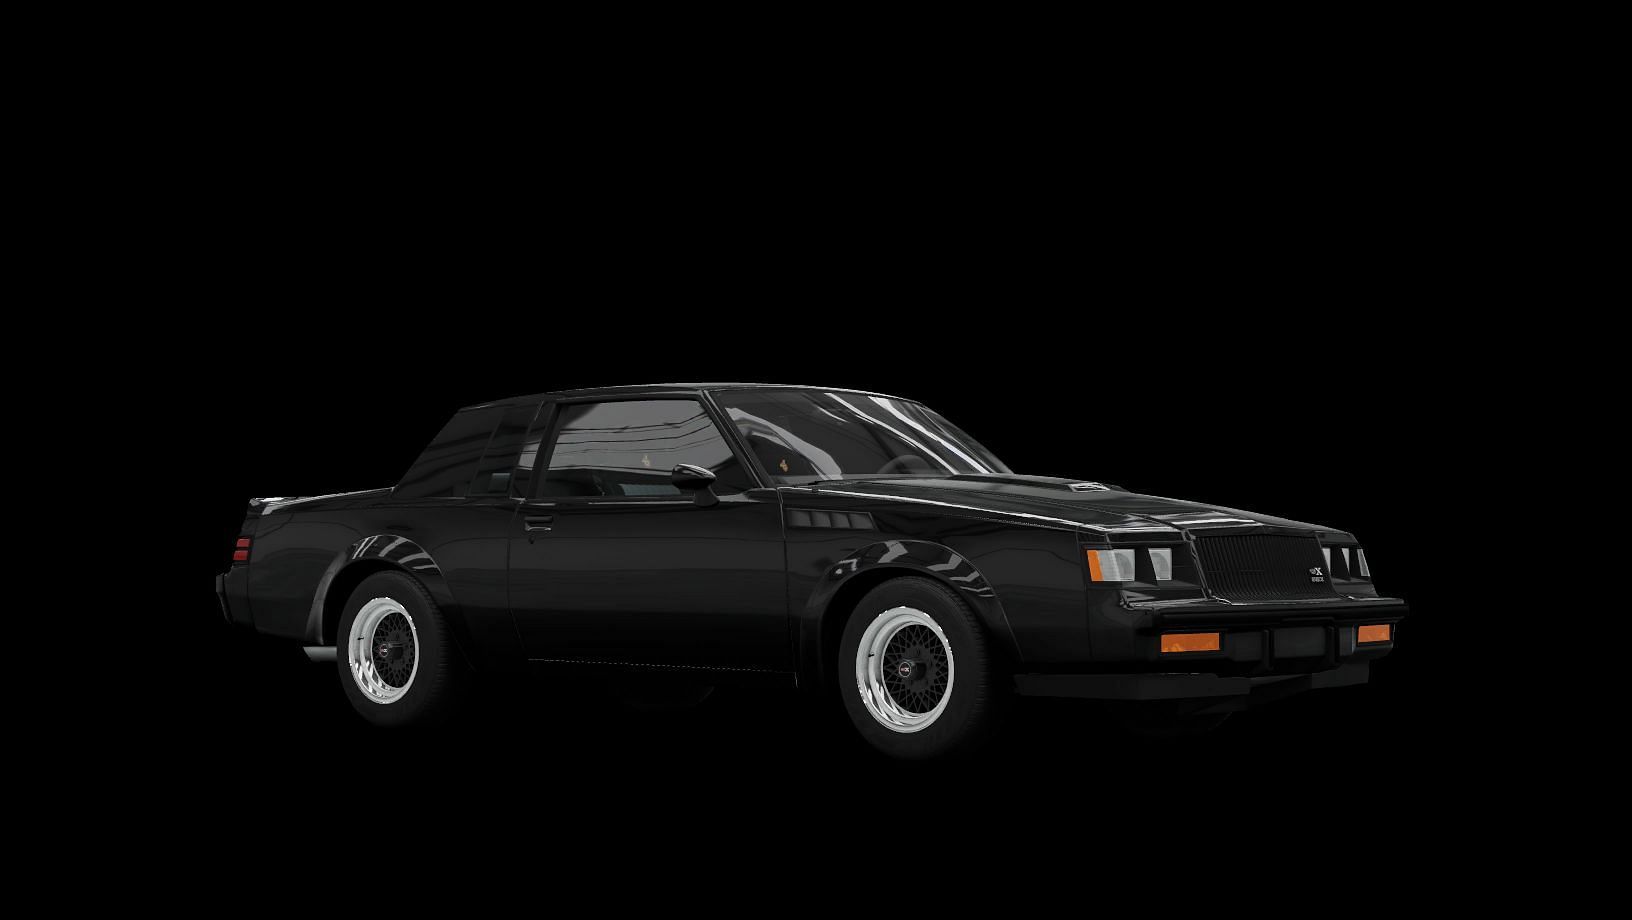 Buick Regal GNX (Image via Forza Wiki)